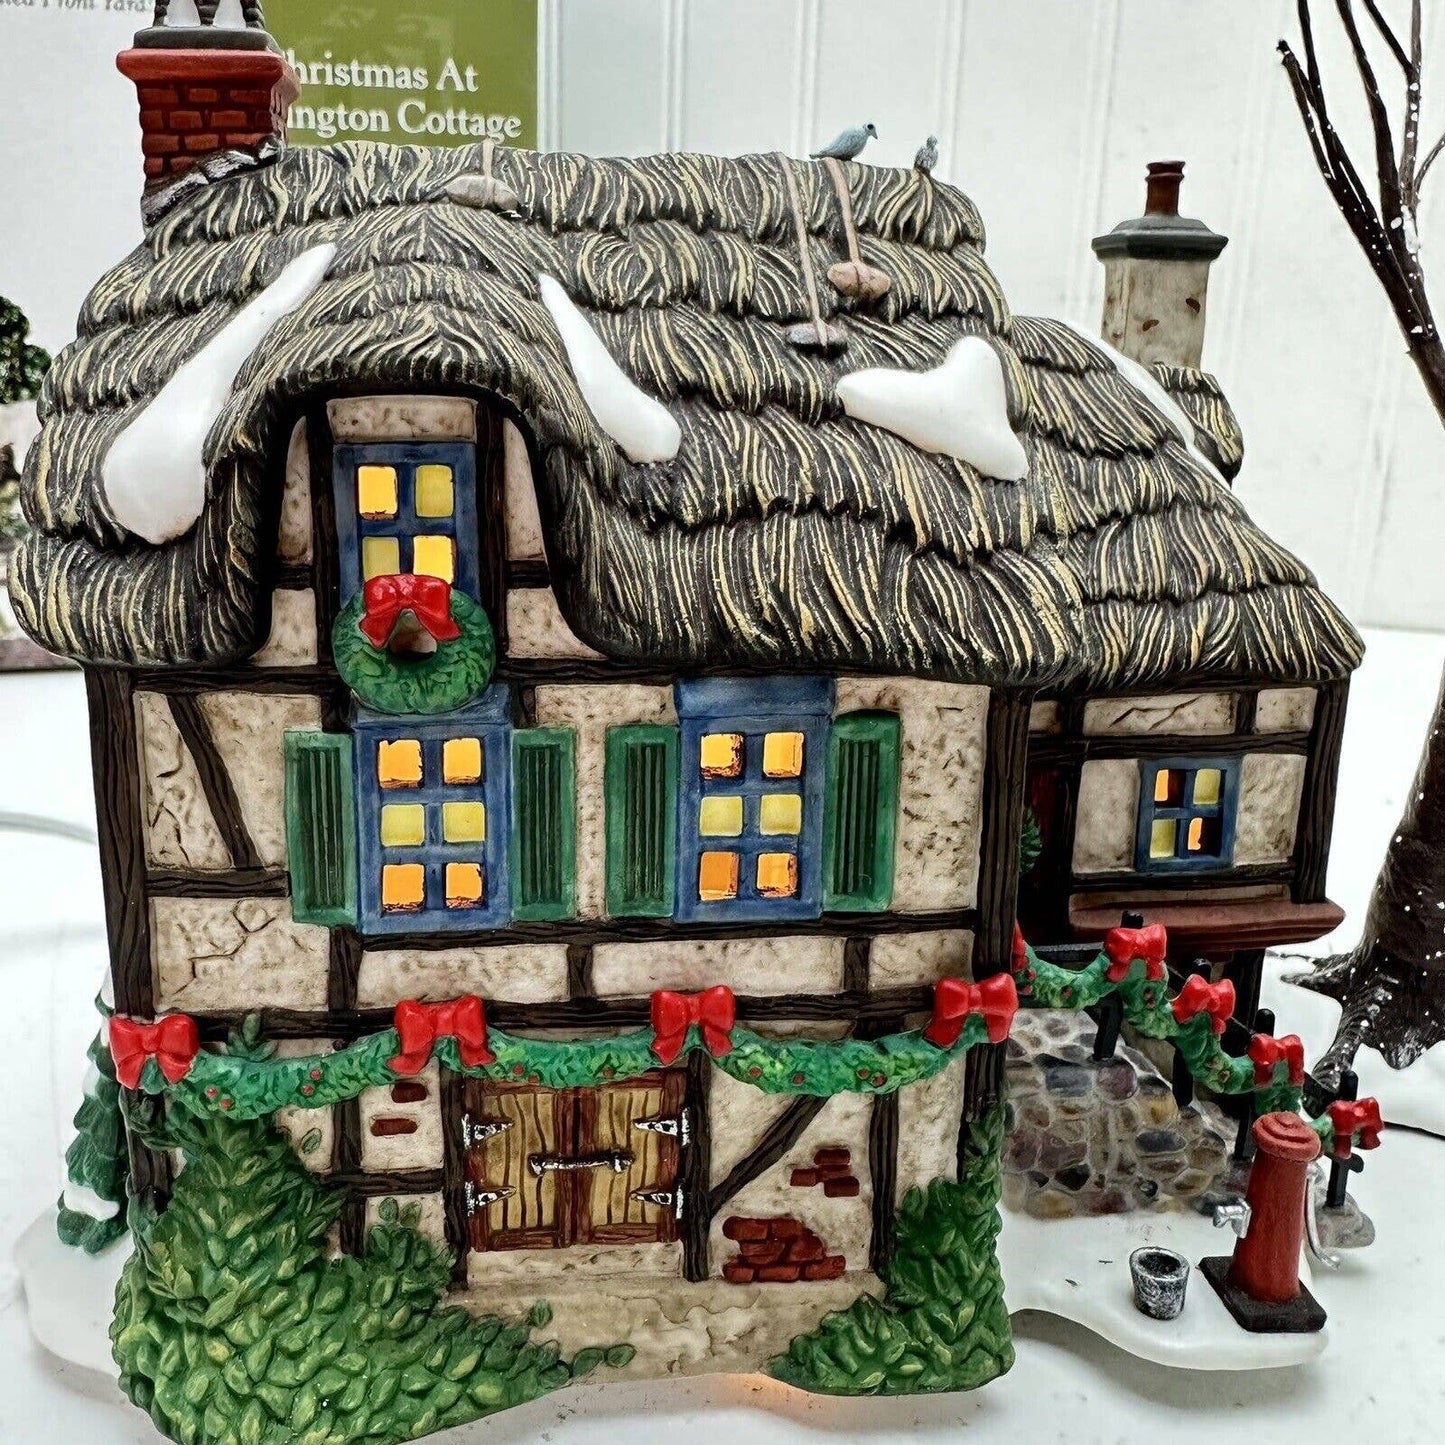 Department 56 Dickens Village Series "Christmas At Codington Cottage" 2002